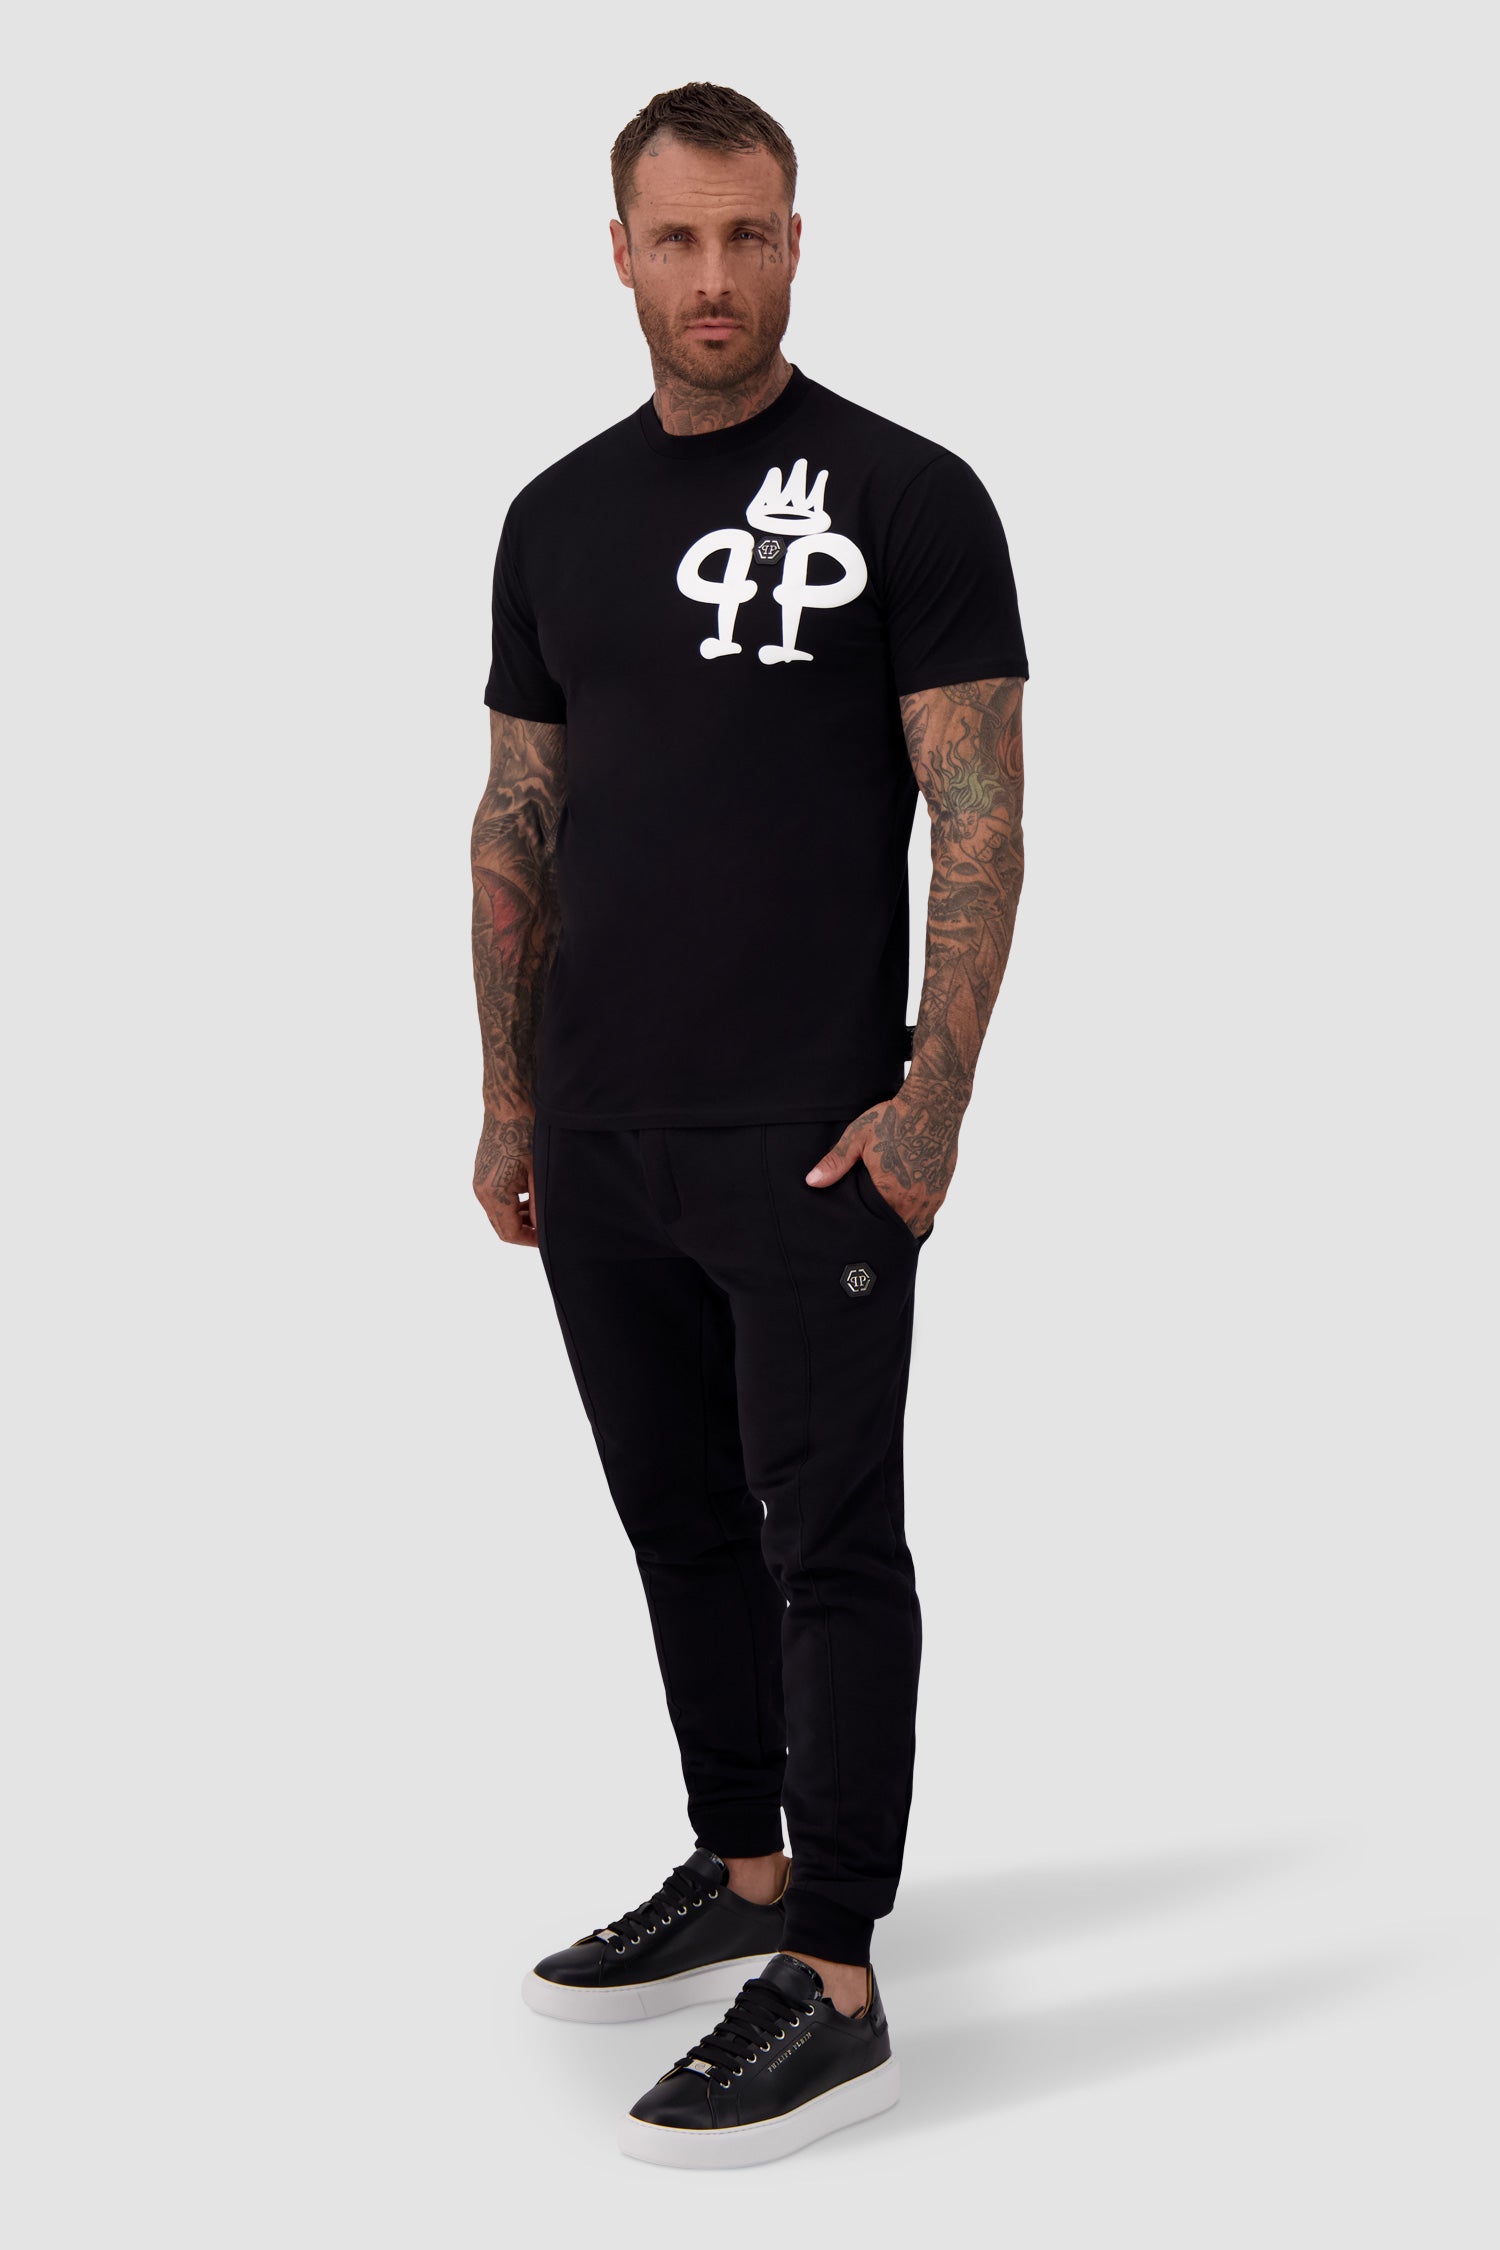 Philipp Plein Black Round neck SS Iconic Plein T-Shirt